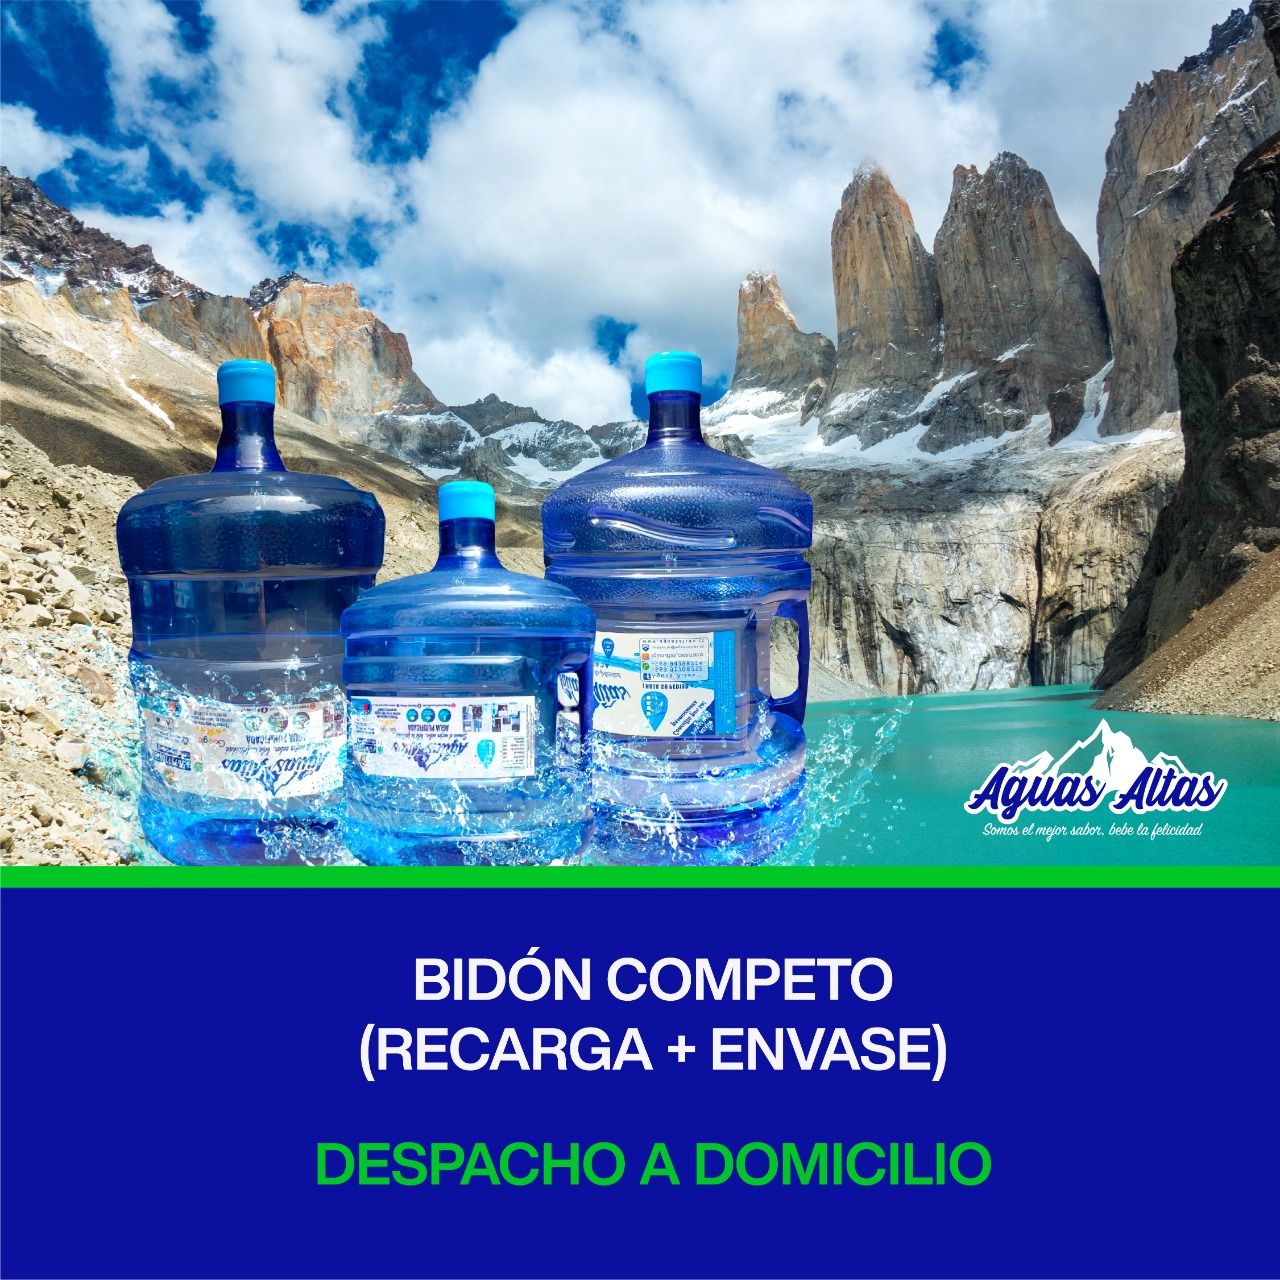 Agua bidon 20 litros retornable - A Domicilio - AyF Market Gourmet